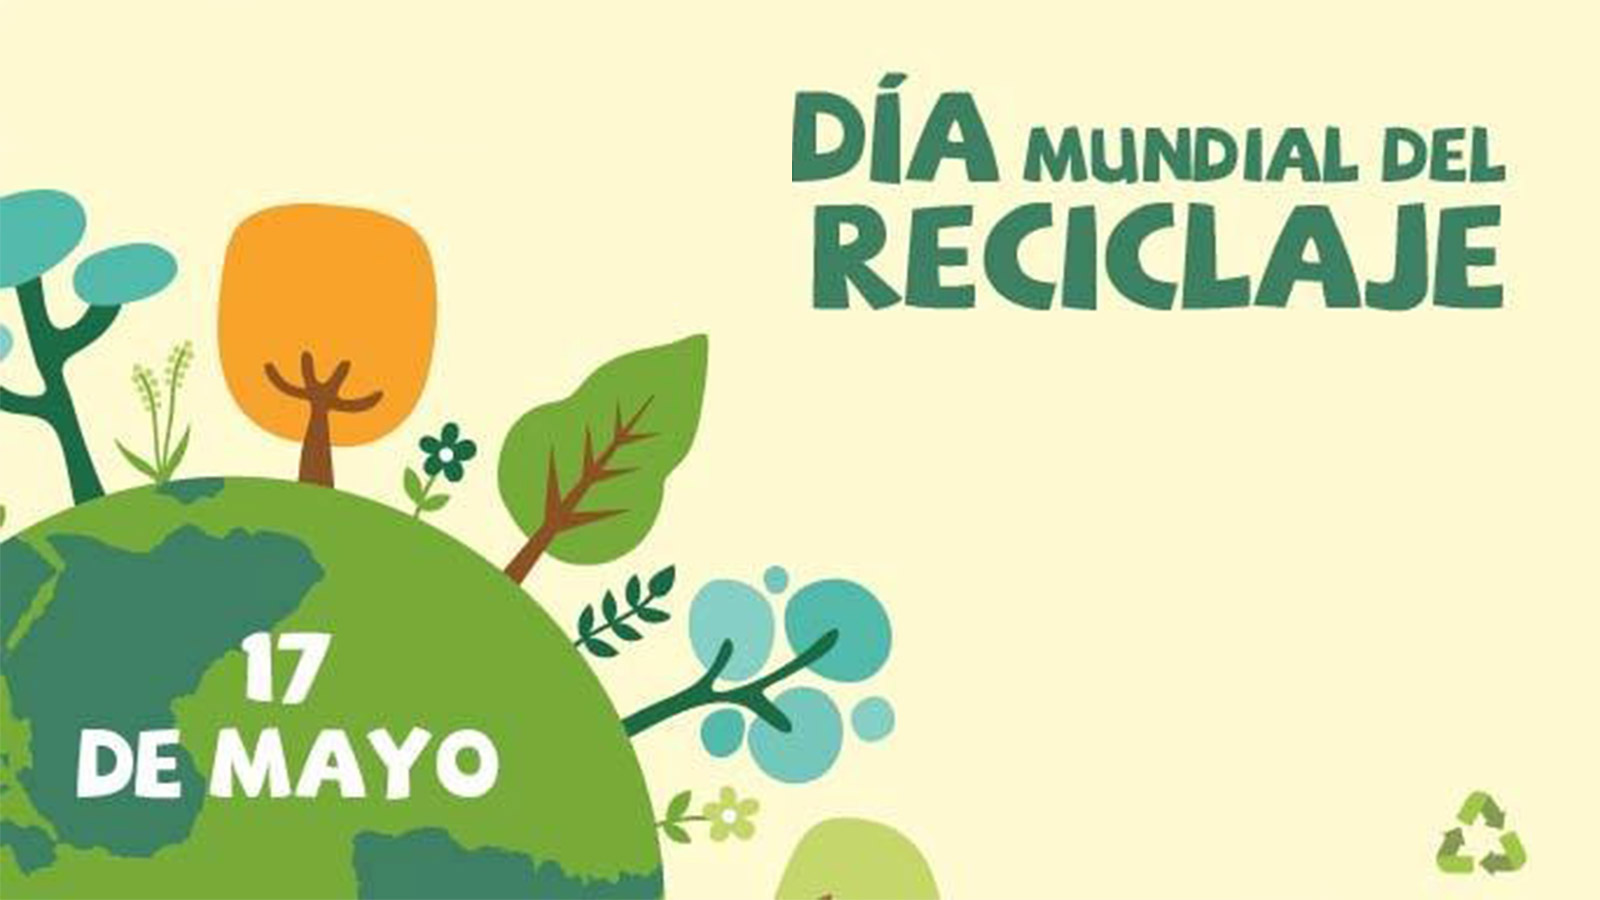 Dian Mundial del reciclaje